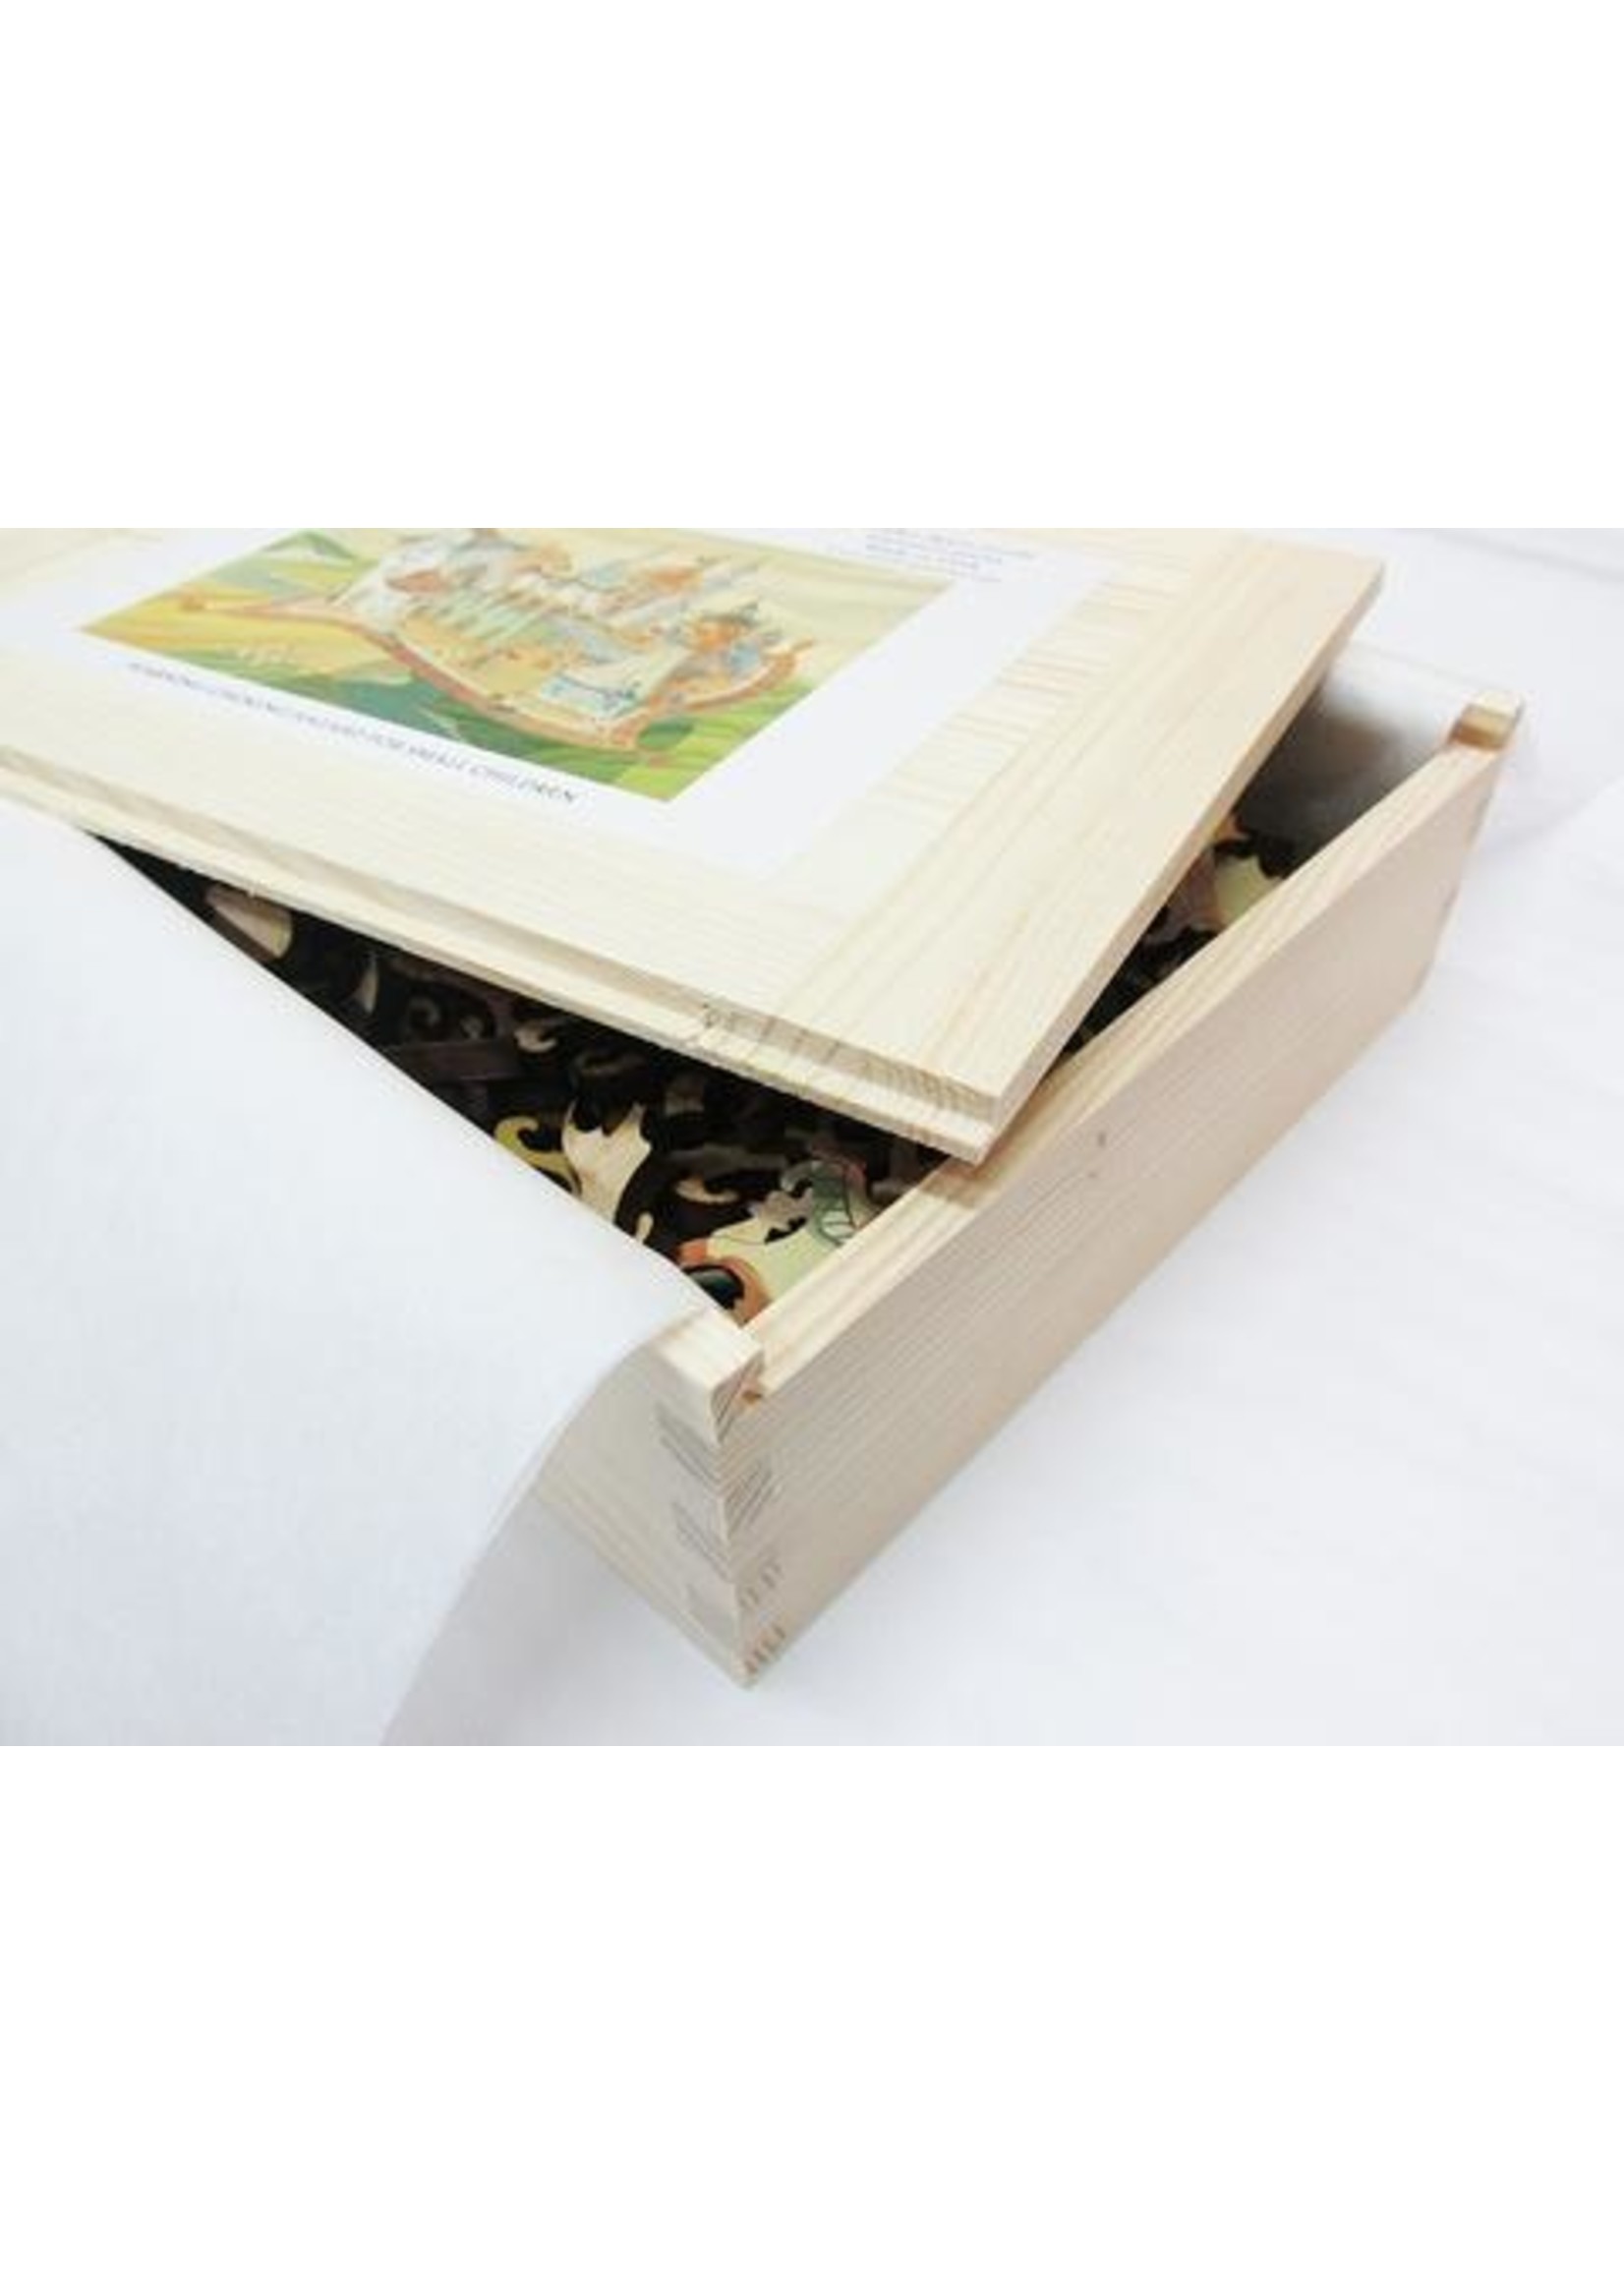 Artifact Puzzles "Magic Carpet" Wooden Jigsaw Puzzle